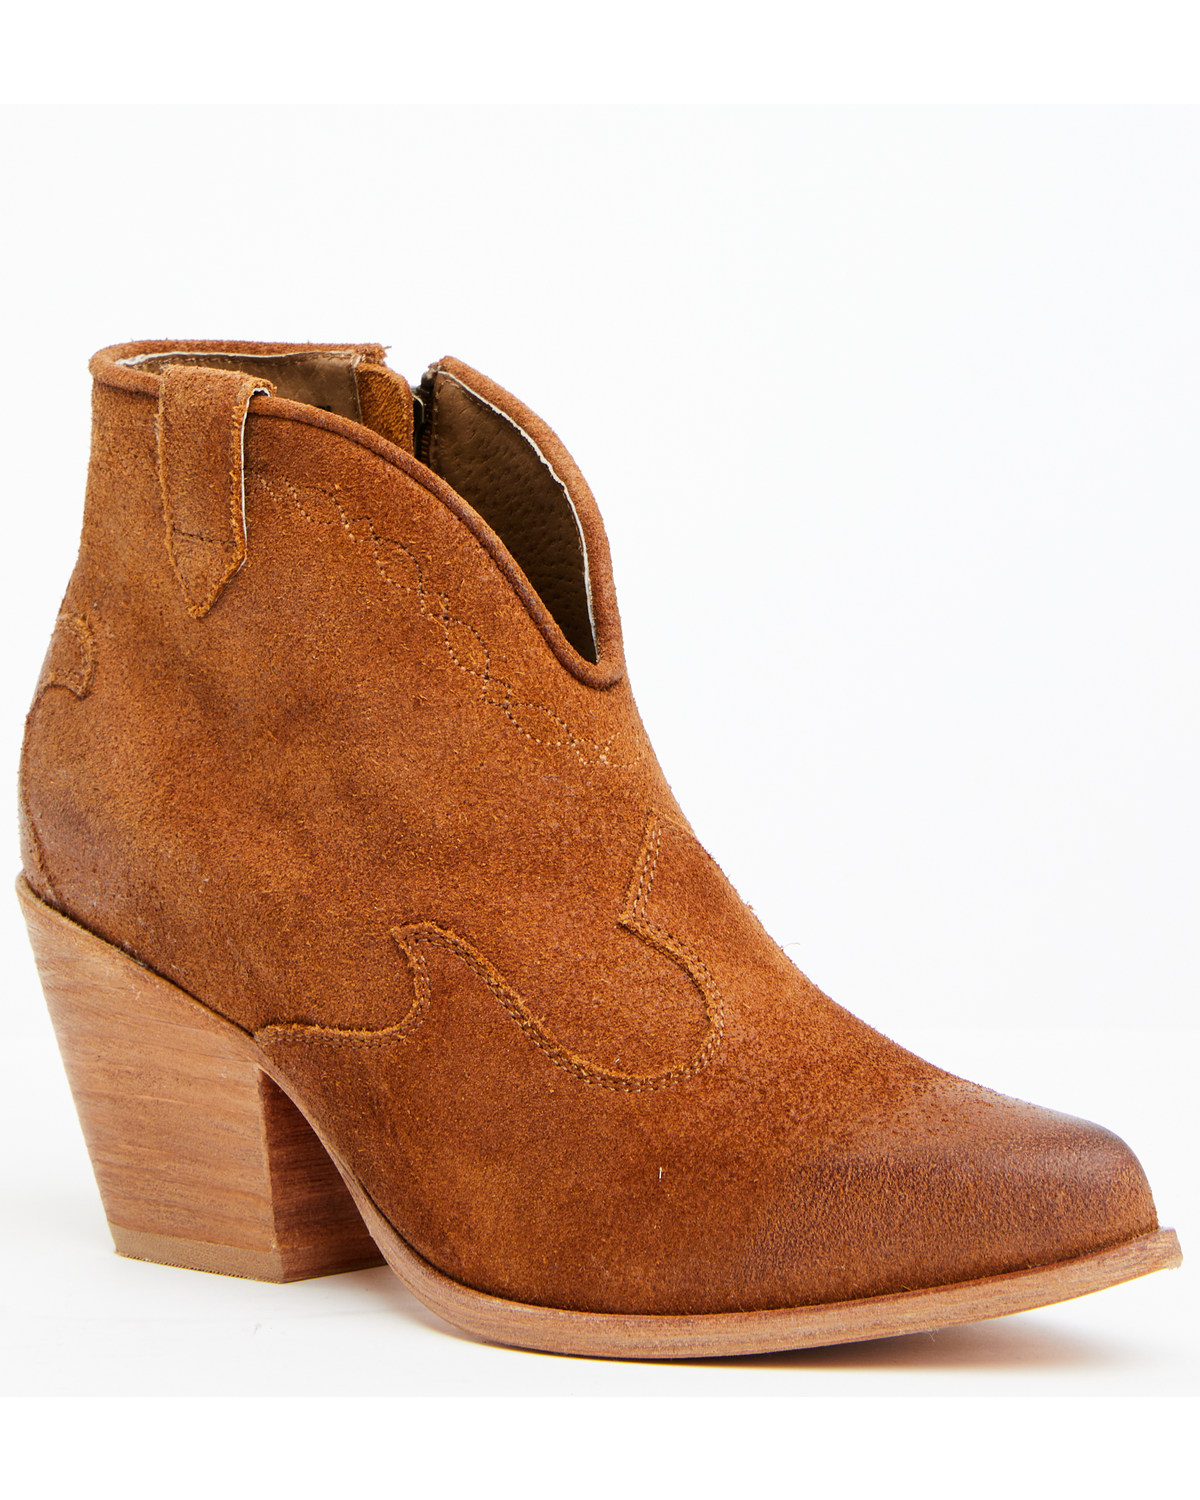 Shyanne Women's Jodi Suede Leather Booties - Pointed Toe